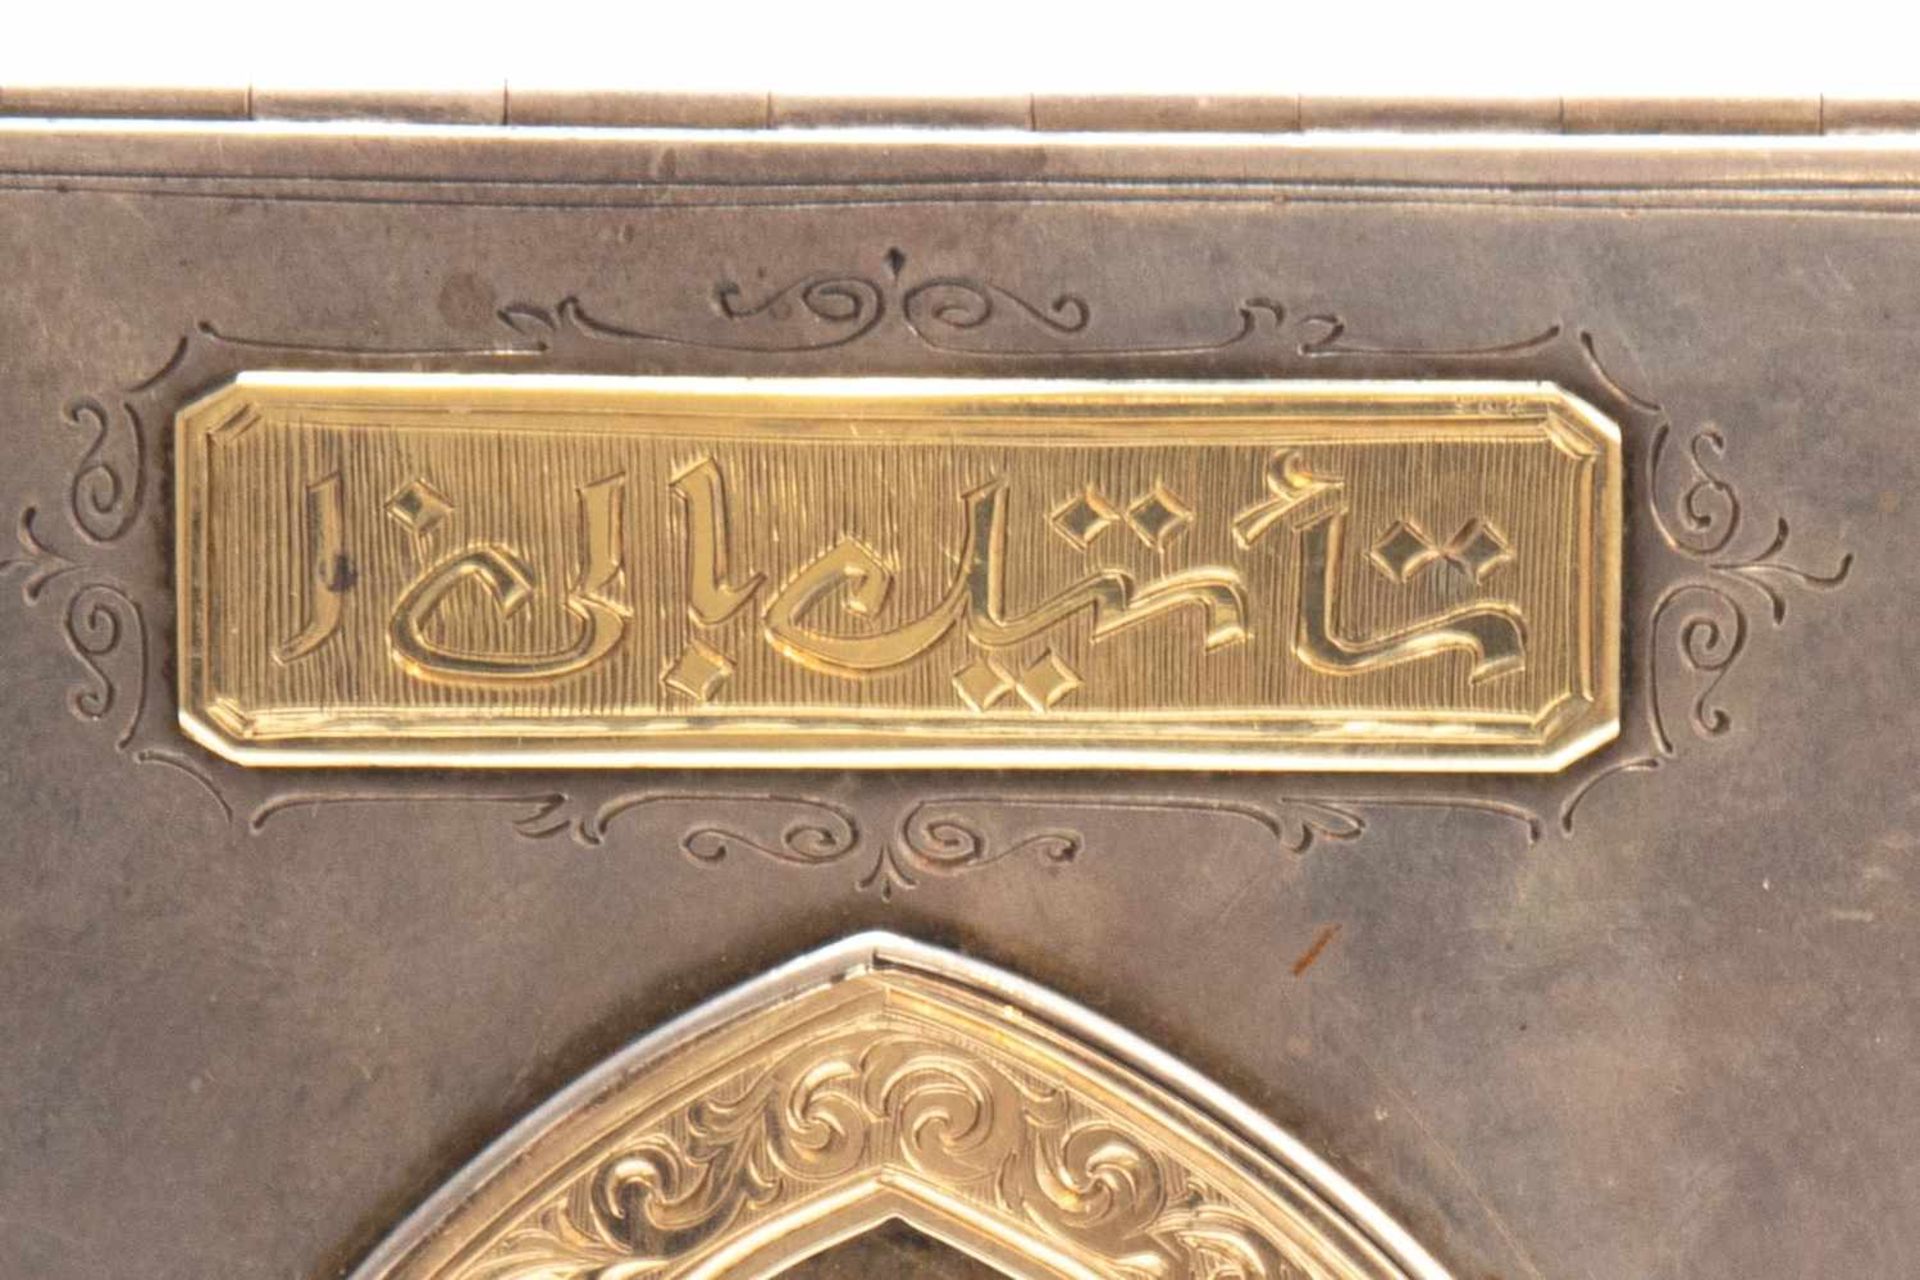 Oriental/Arabian cigarette case - Image 2 of 3